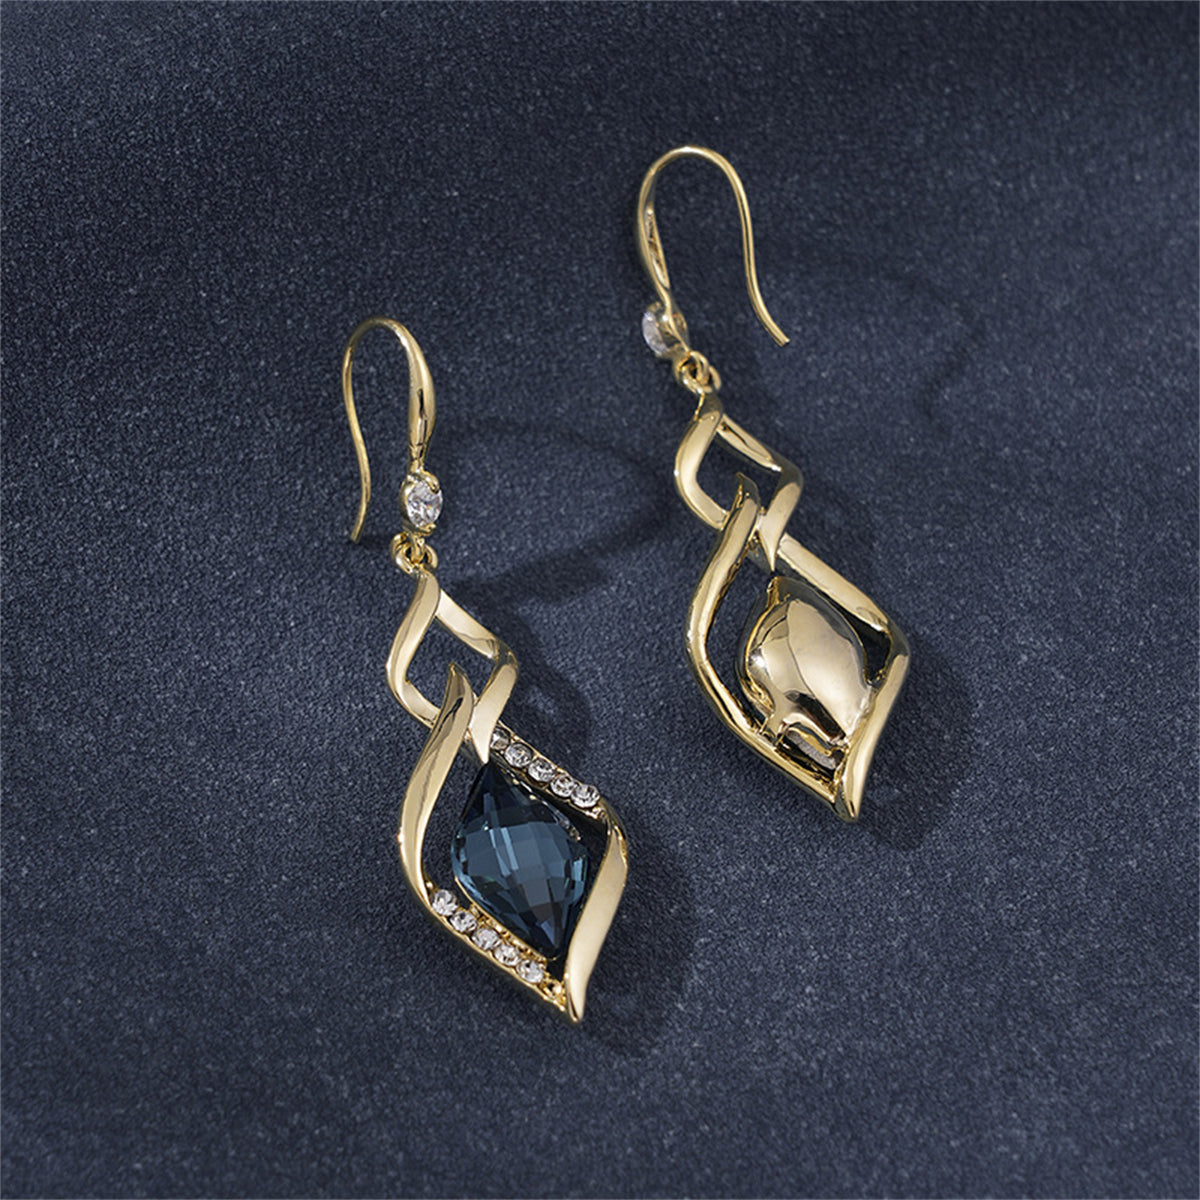 Cubic Zirconia & Blue Crystal Drop Earrings